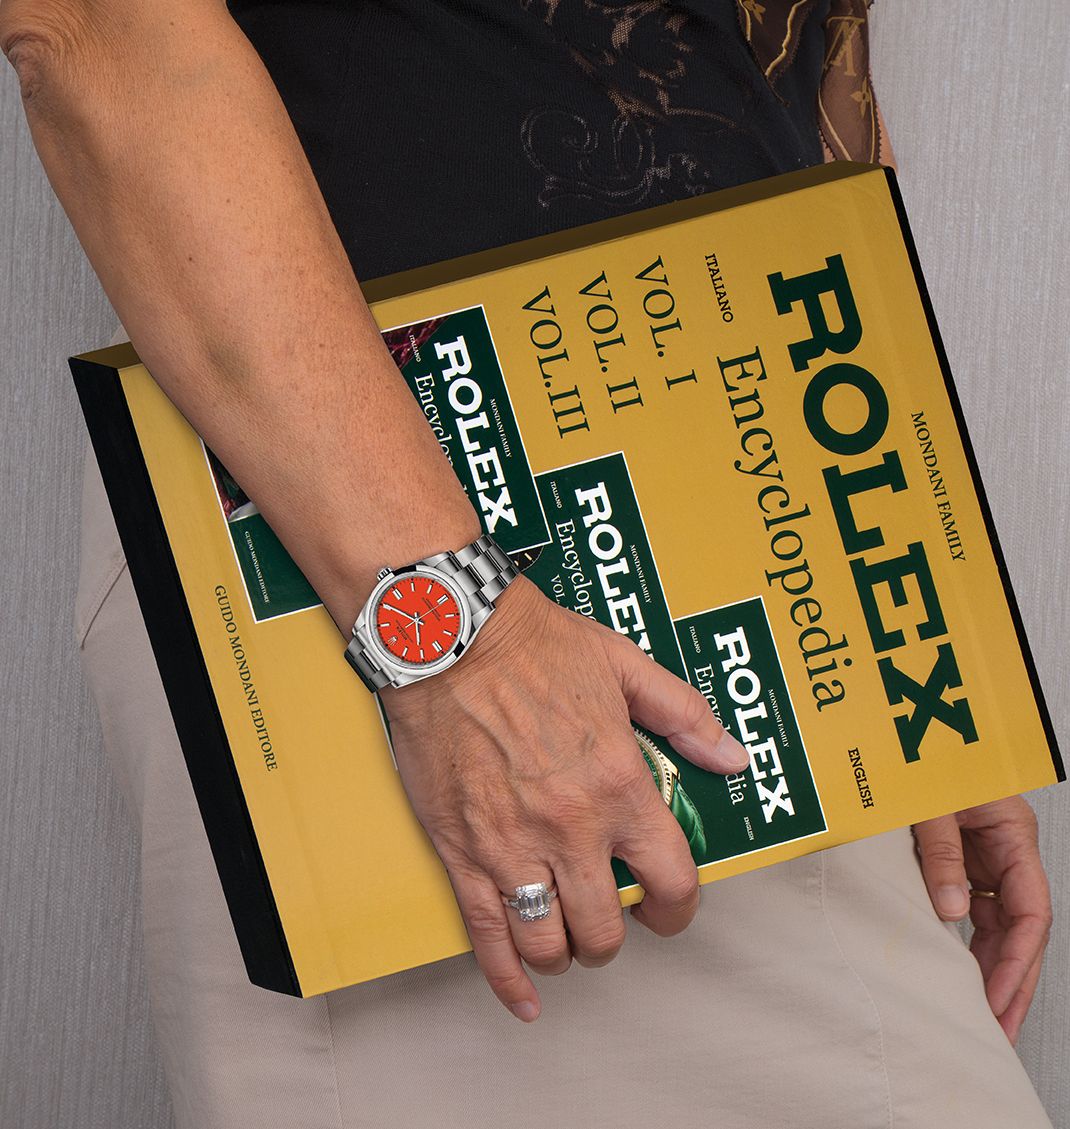 Mondani – Rolex Encyclopedia (3 volumes)